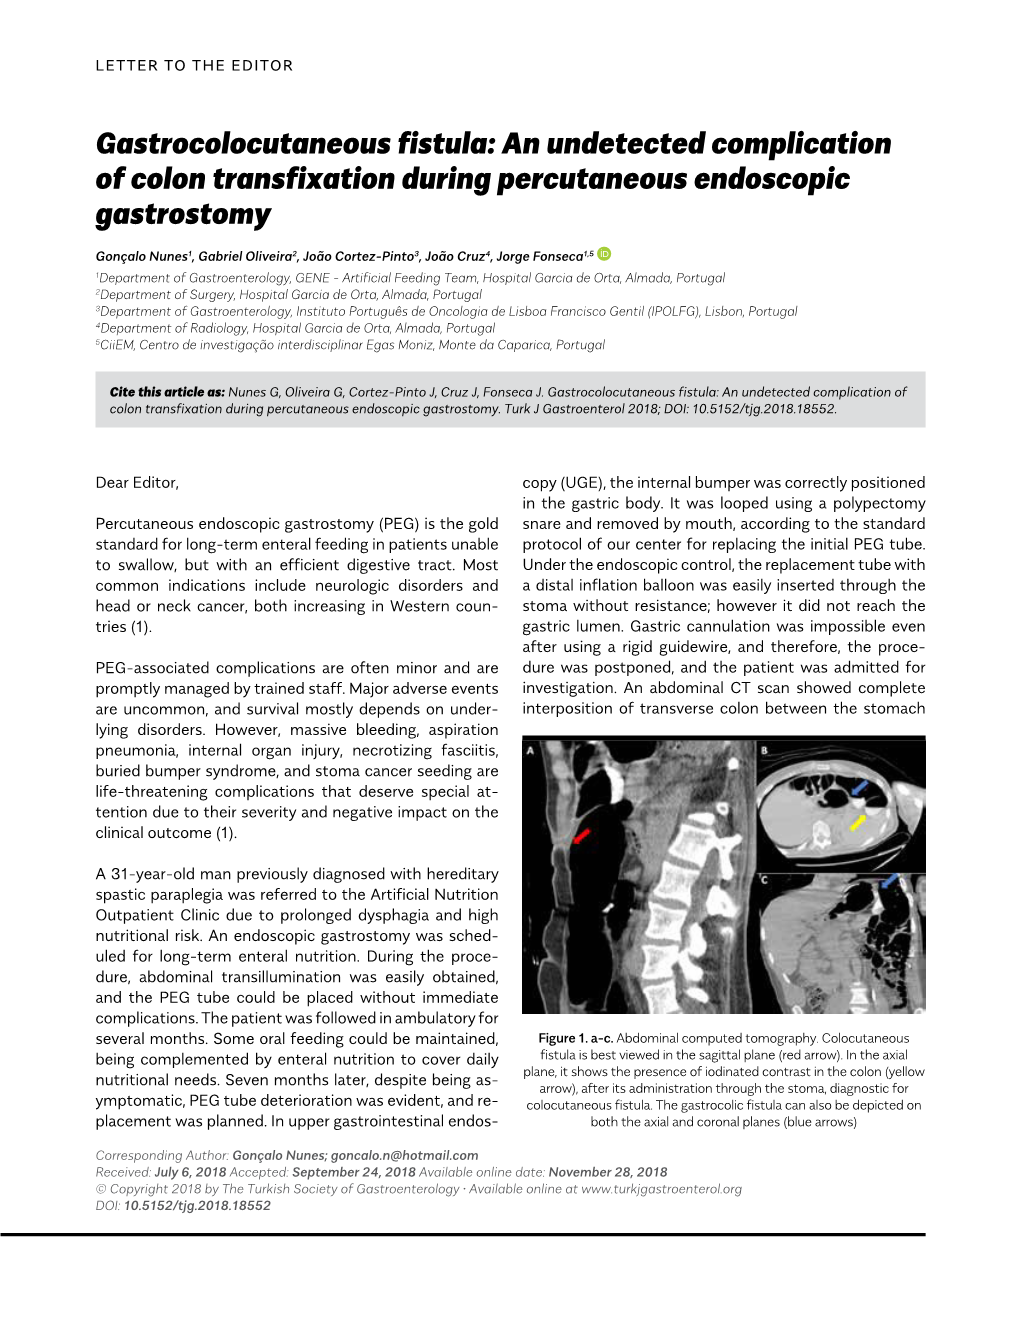 Gastrocolocutaneous Fistula: an Undetected Complication of Colon Transfixation During Percutaneous Endoscopic Gastrostomy